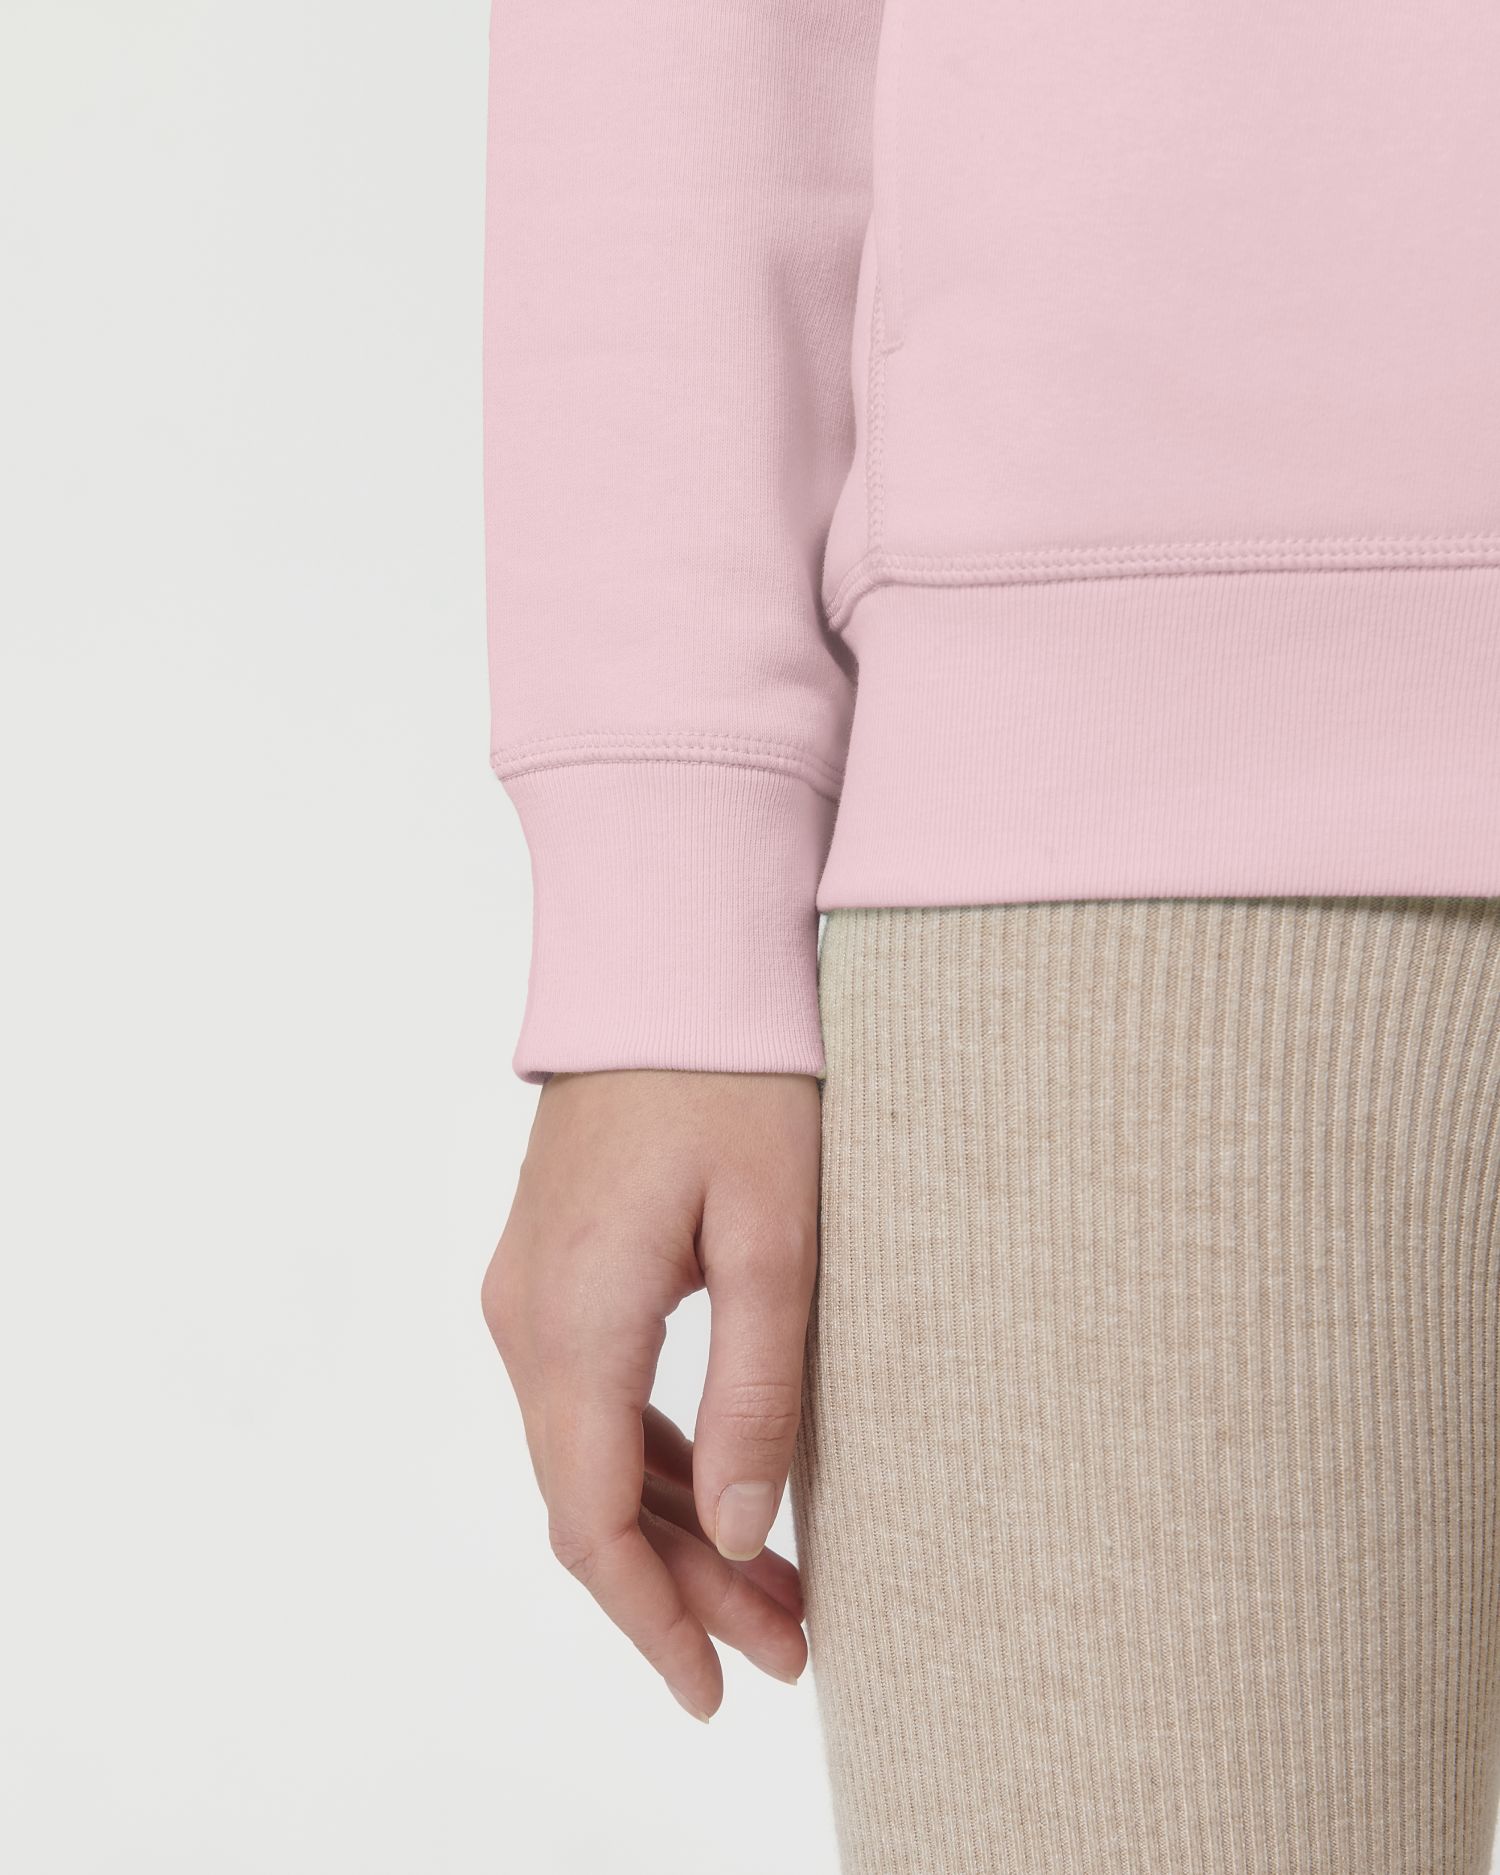 Be Famous Unisex Side Pocket Hooded Sweatshirt Cotton Pink 3XL